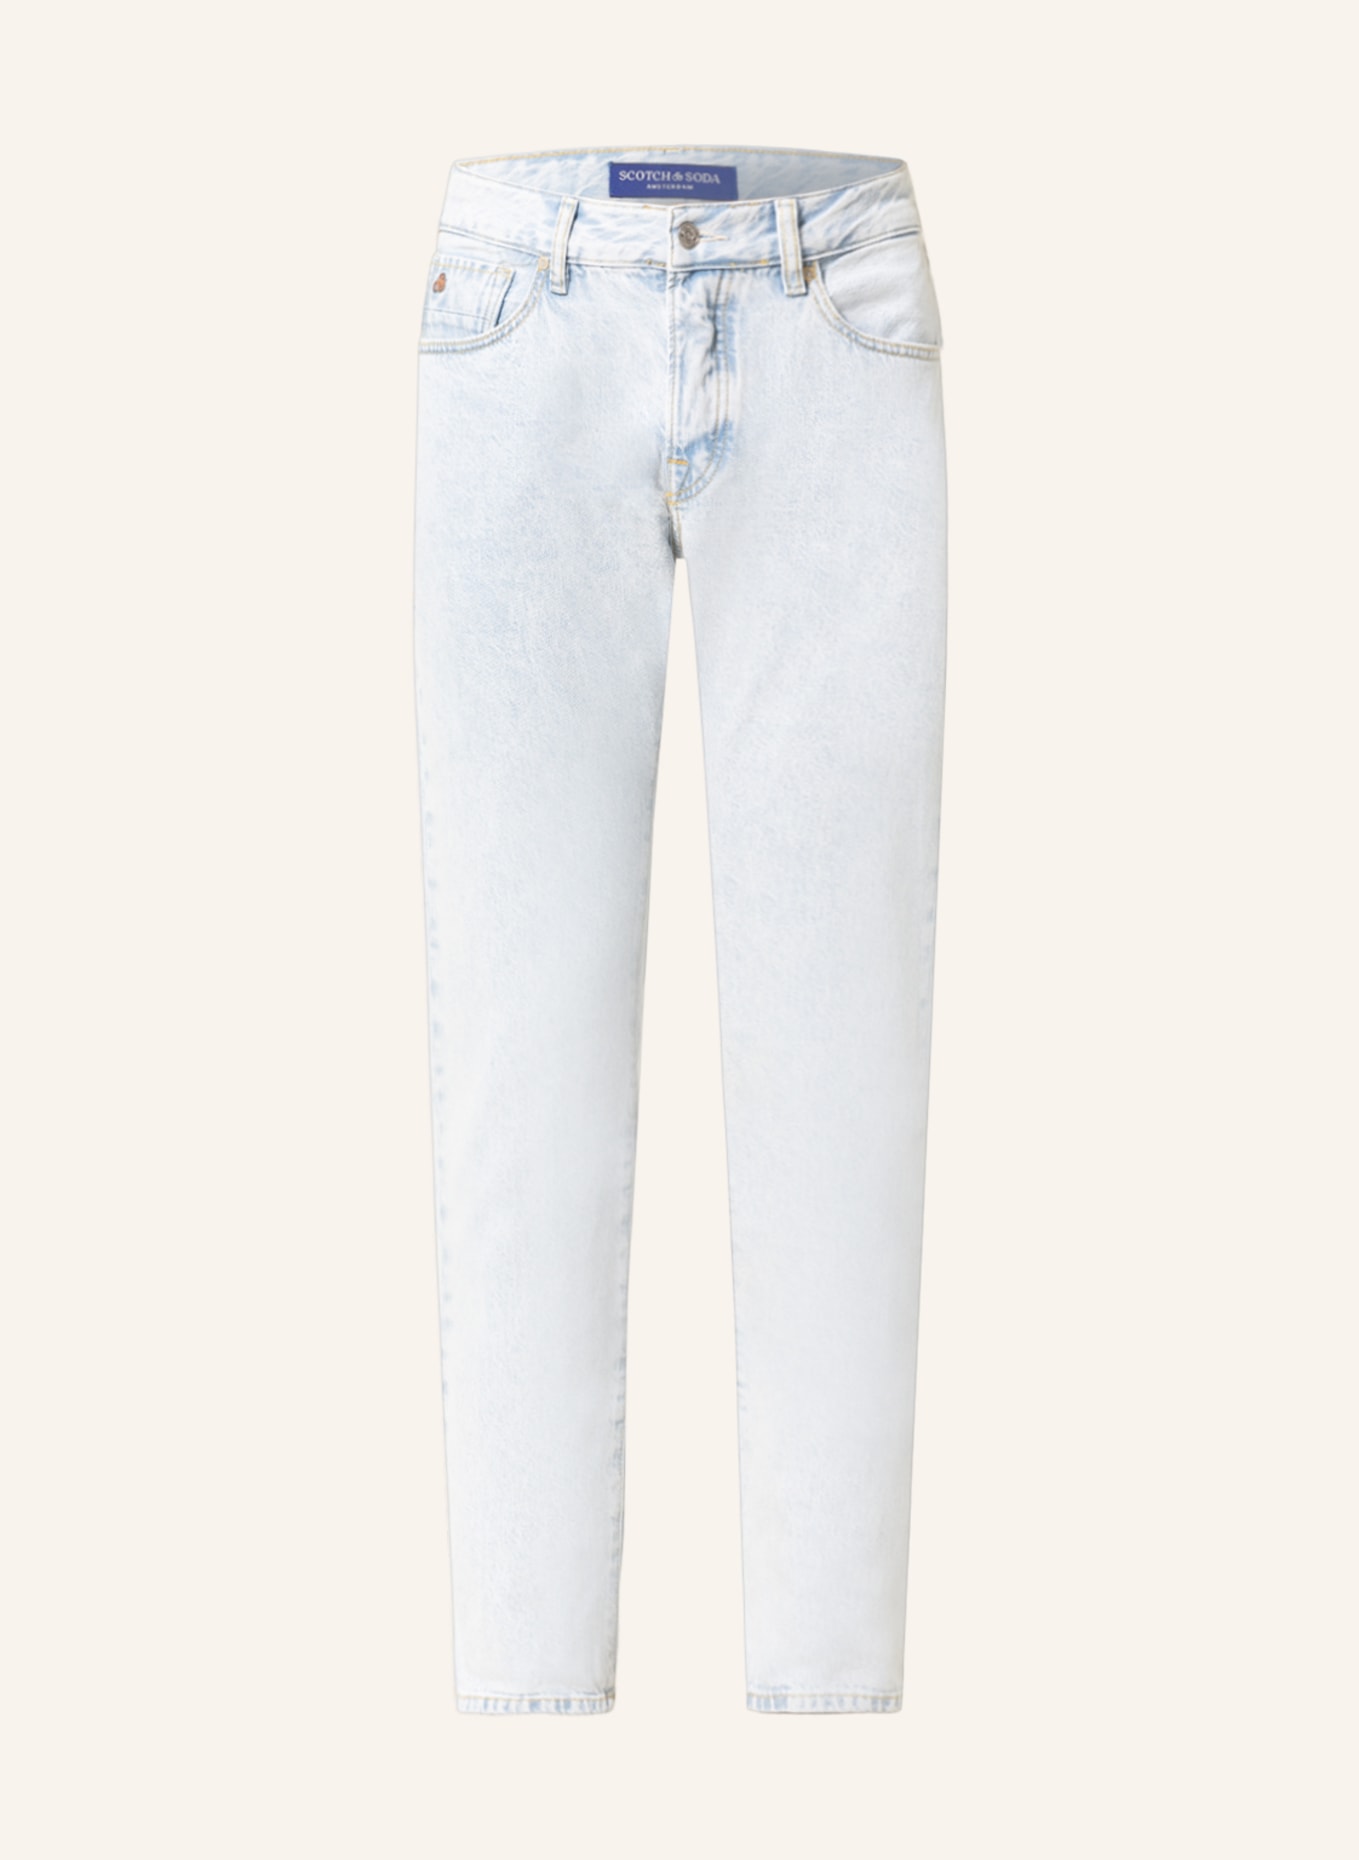 SCOTCH & SODA Jeans RALSTON Slim Fit, Farbe: 5263 Spring Clean (Bild 1)